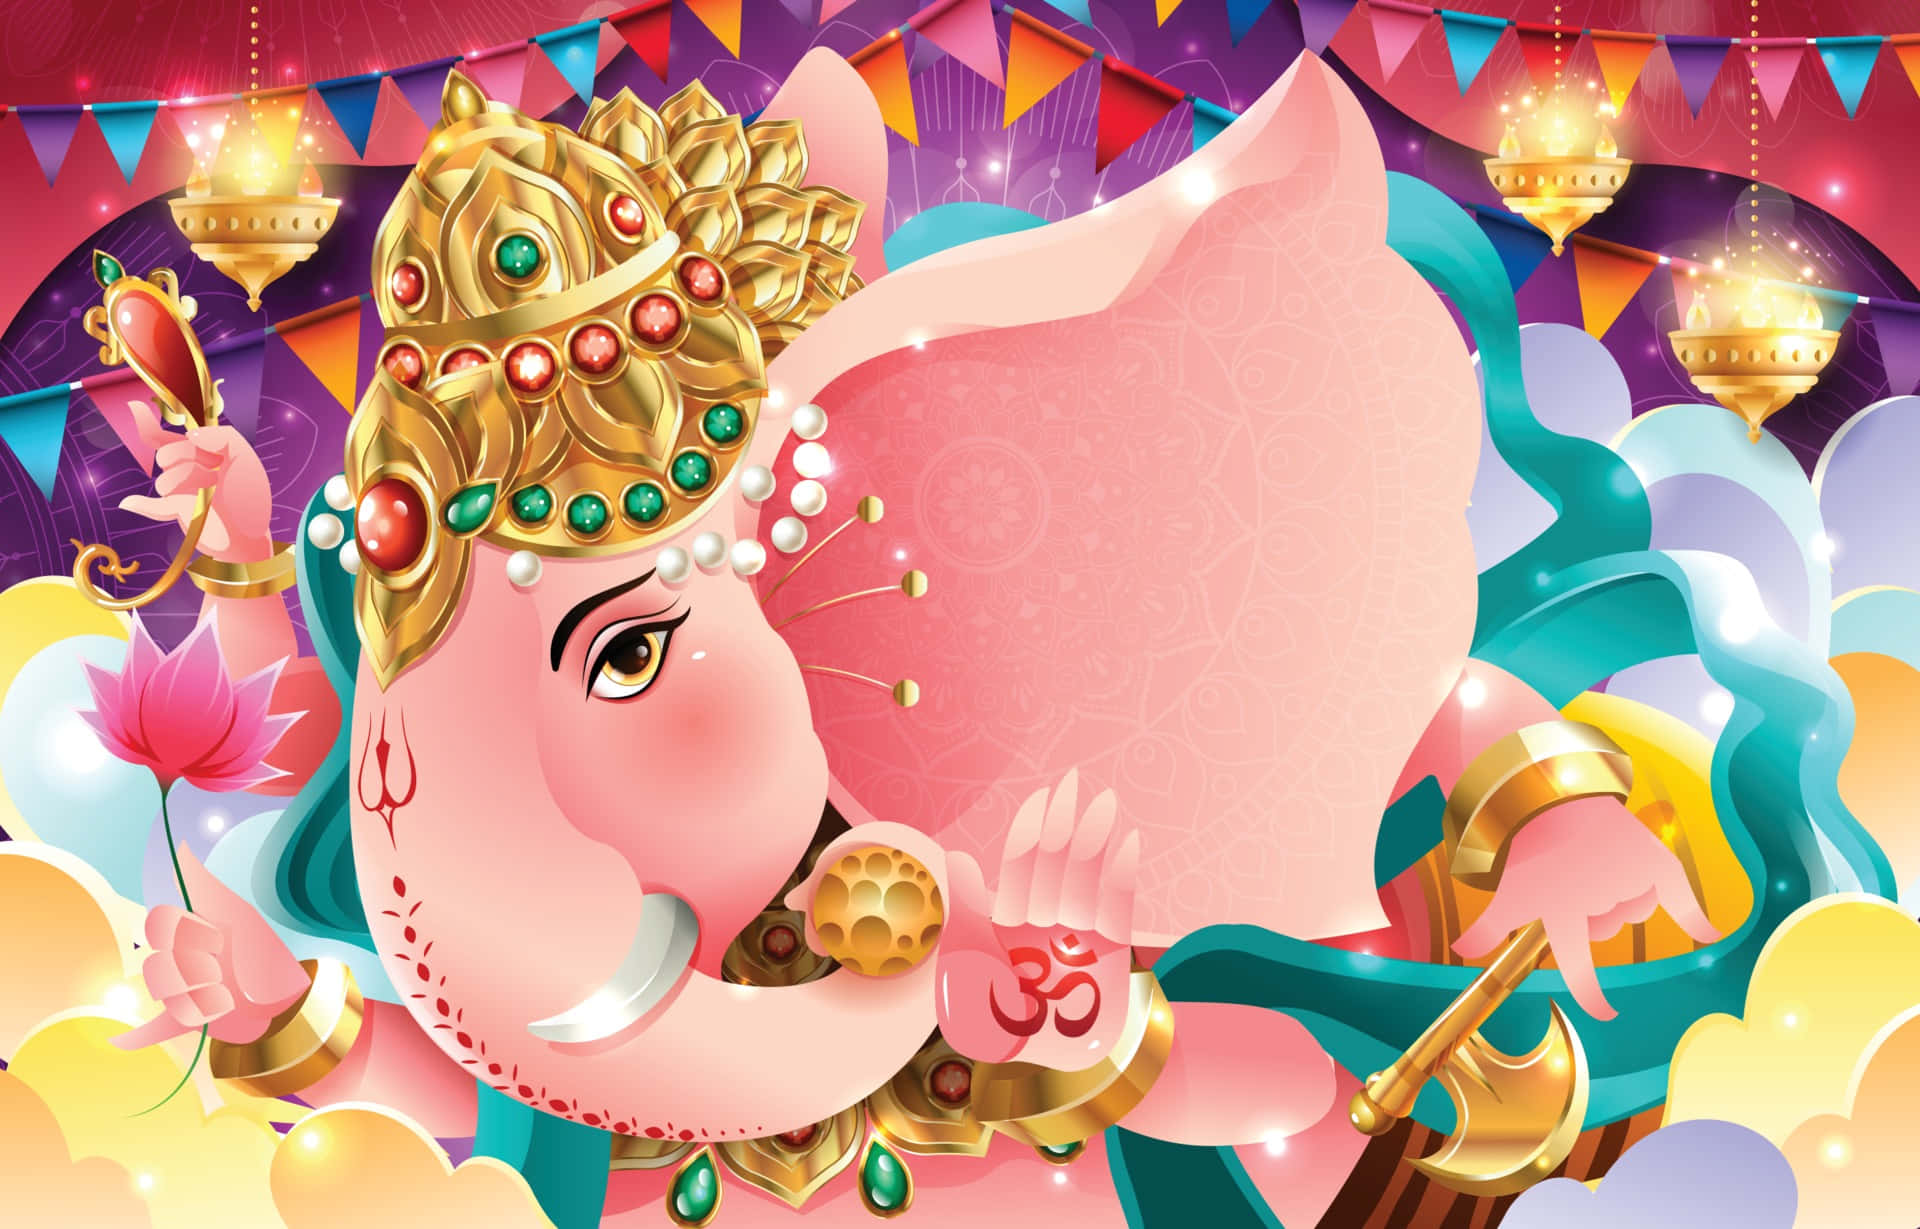 Ganesha - The Lord Of The Elephants